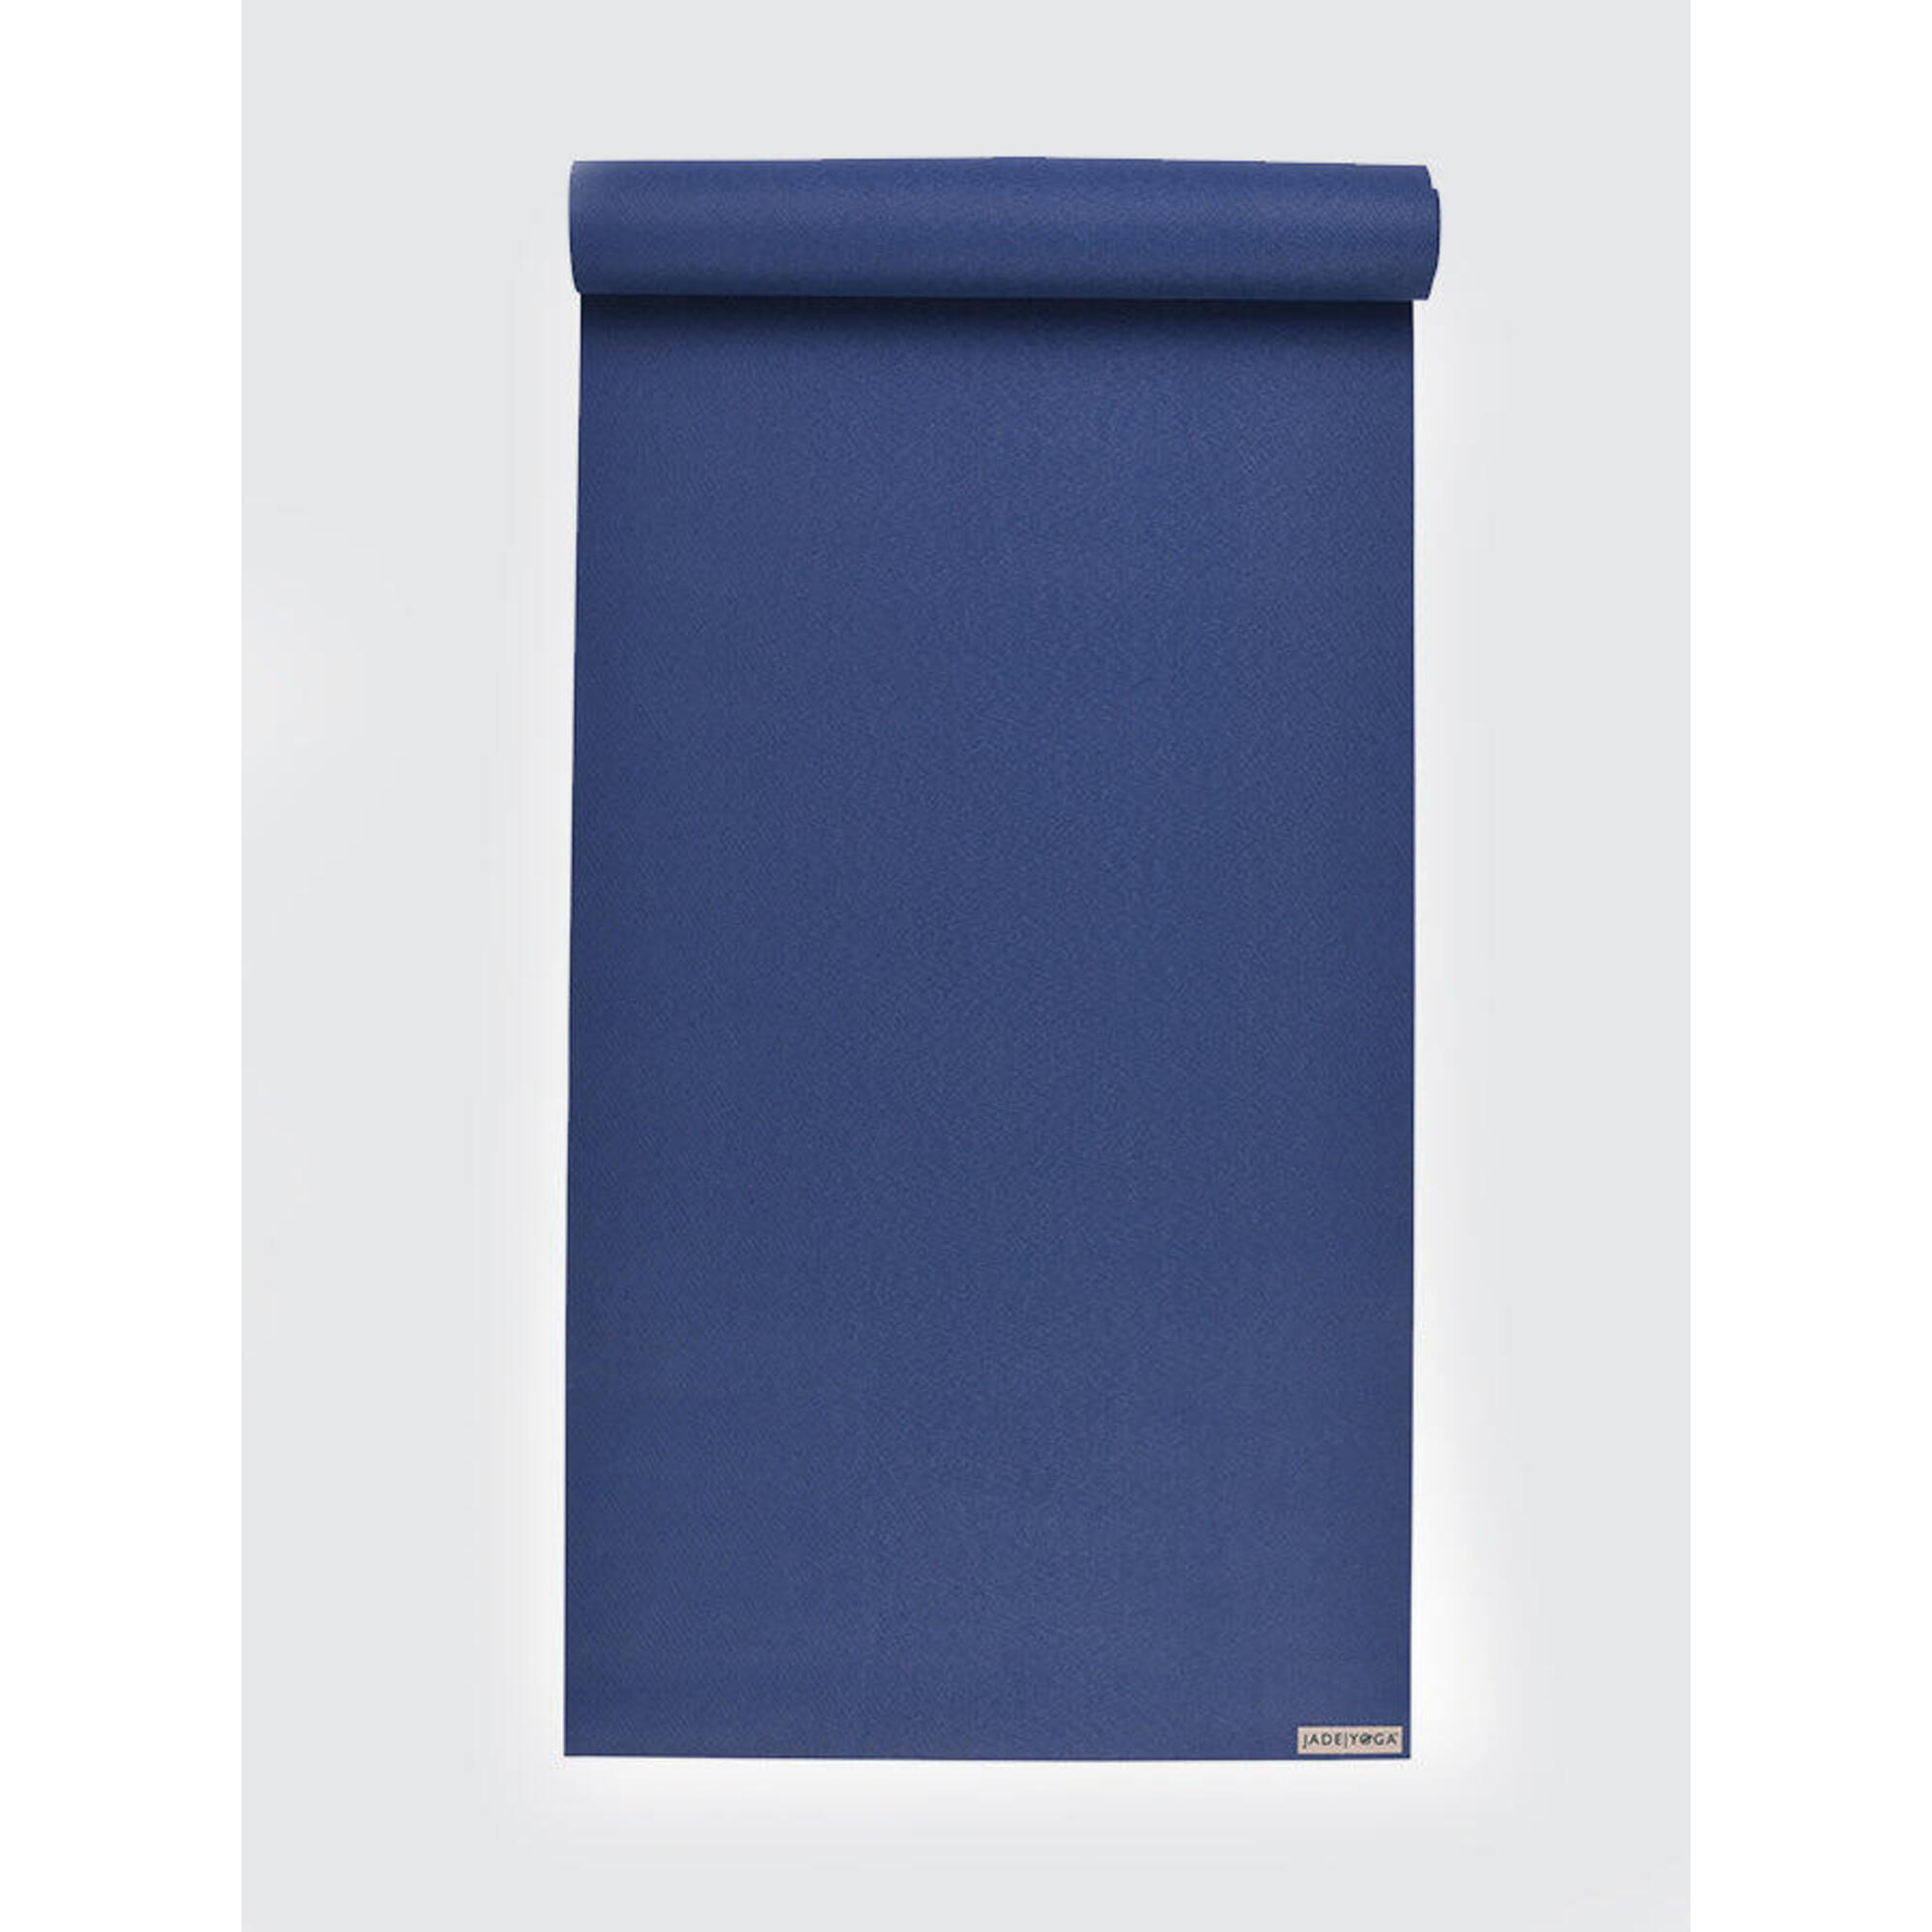 JADE YOGA Jade Yoga Harmony 74 Inch Yoga Mat 5mm - Midnight Blue